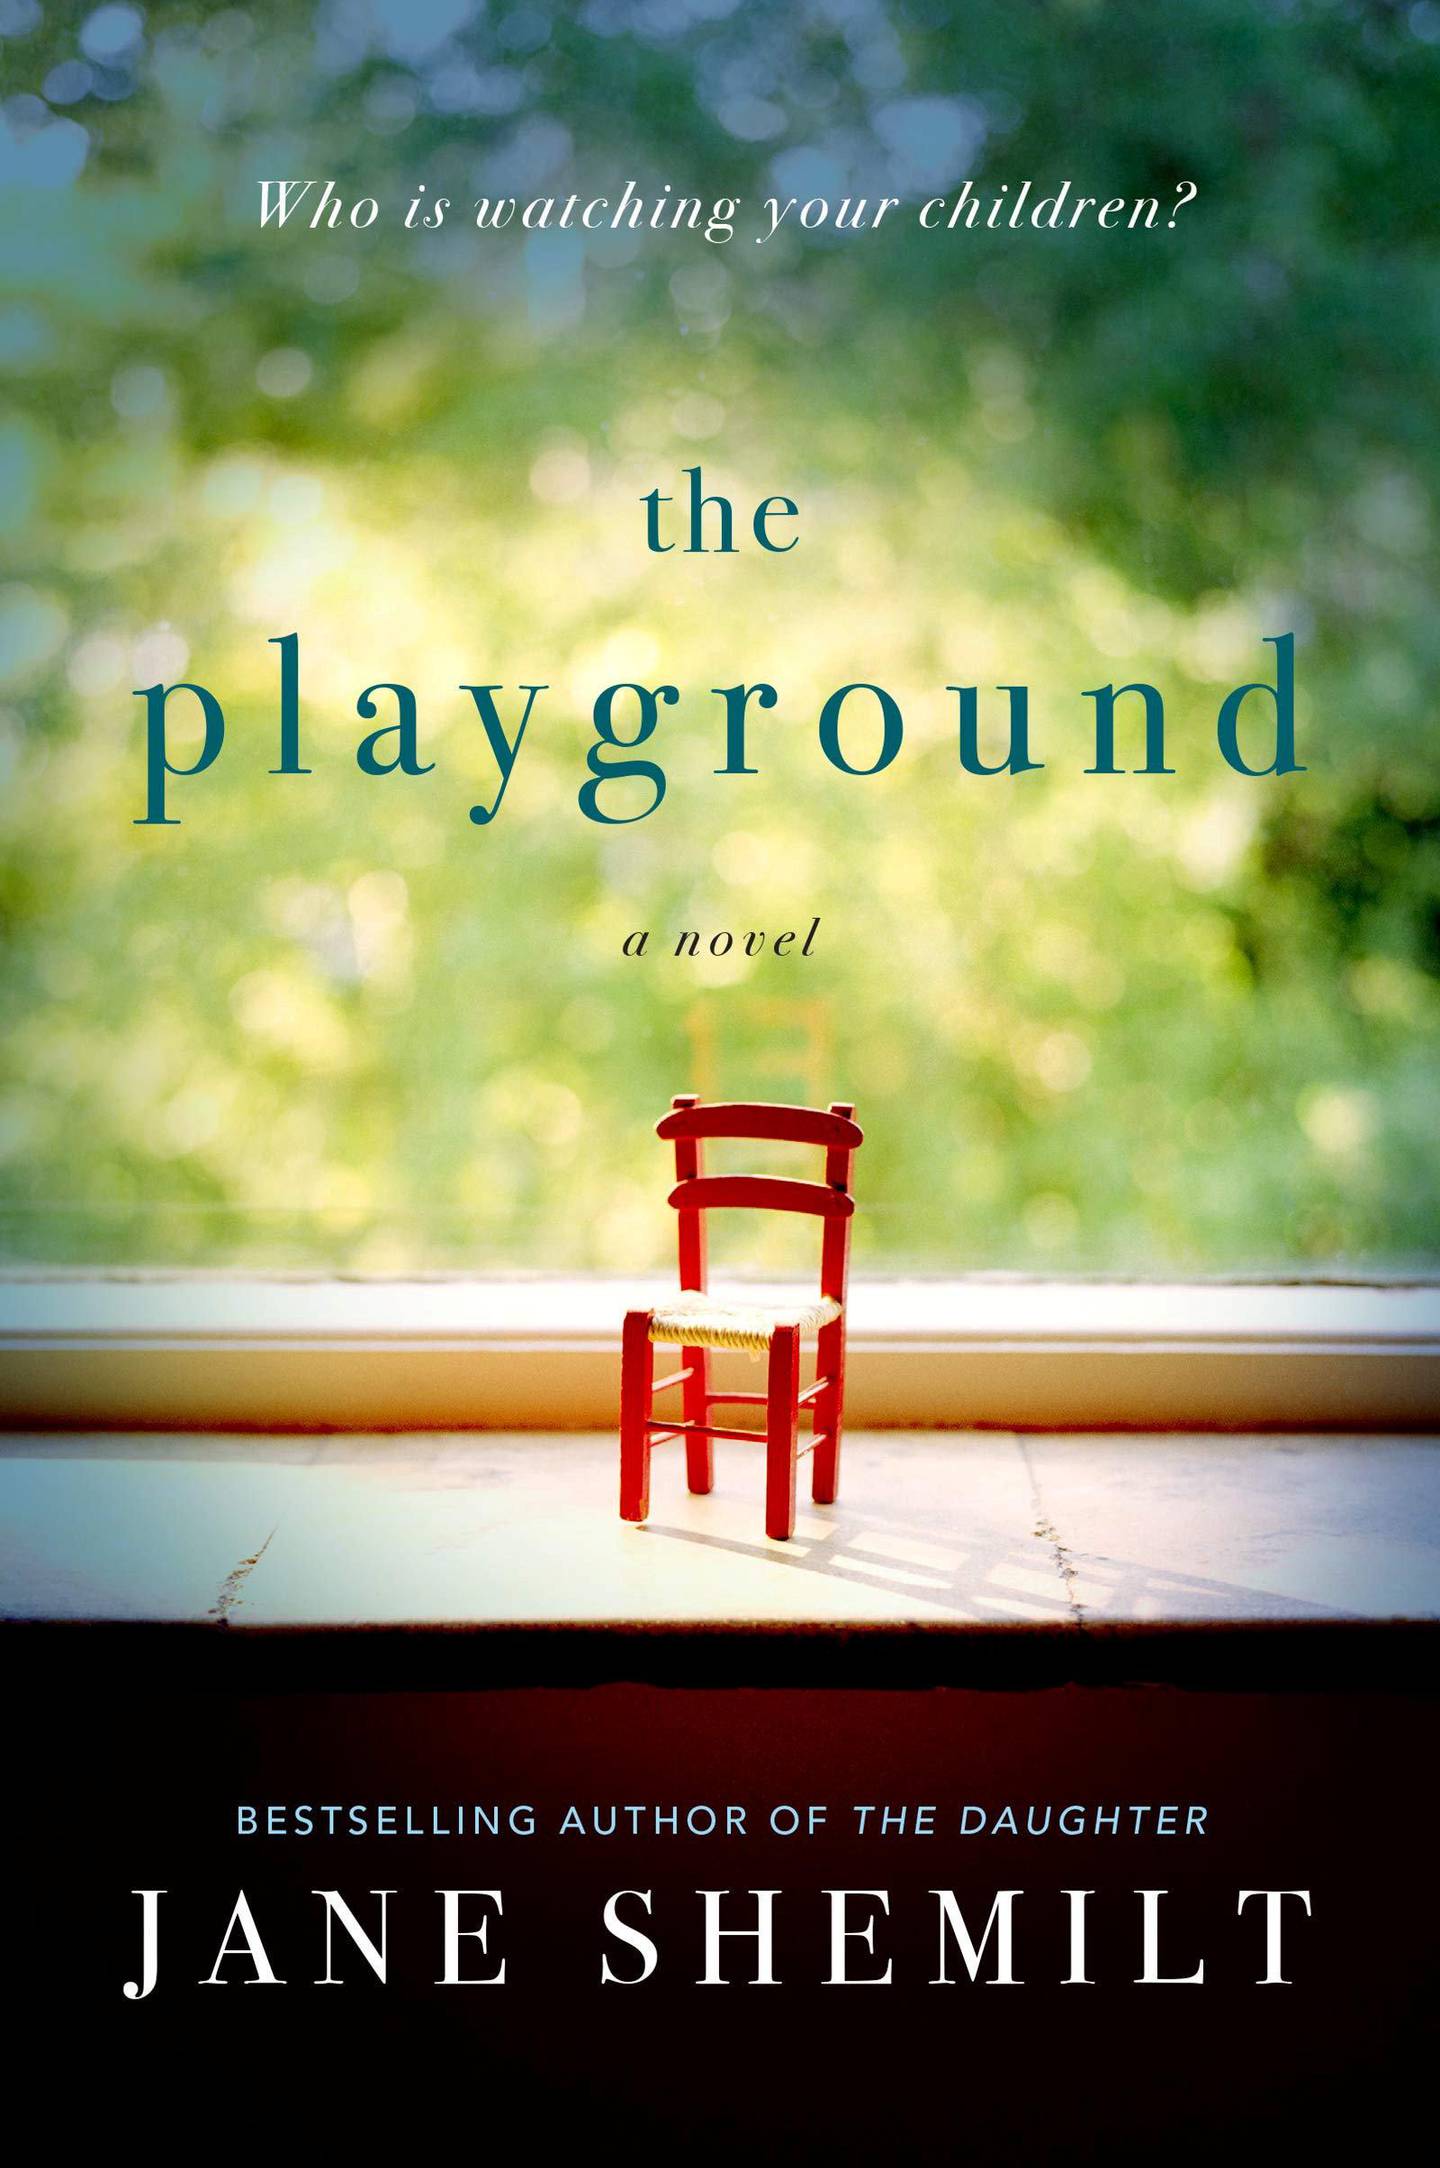 The Playground by Jane Shemilt